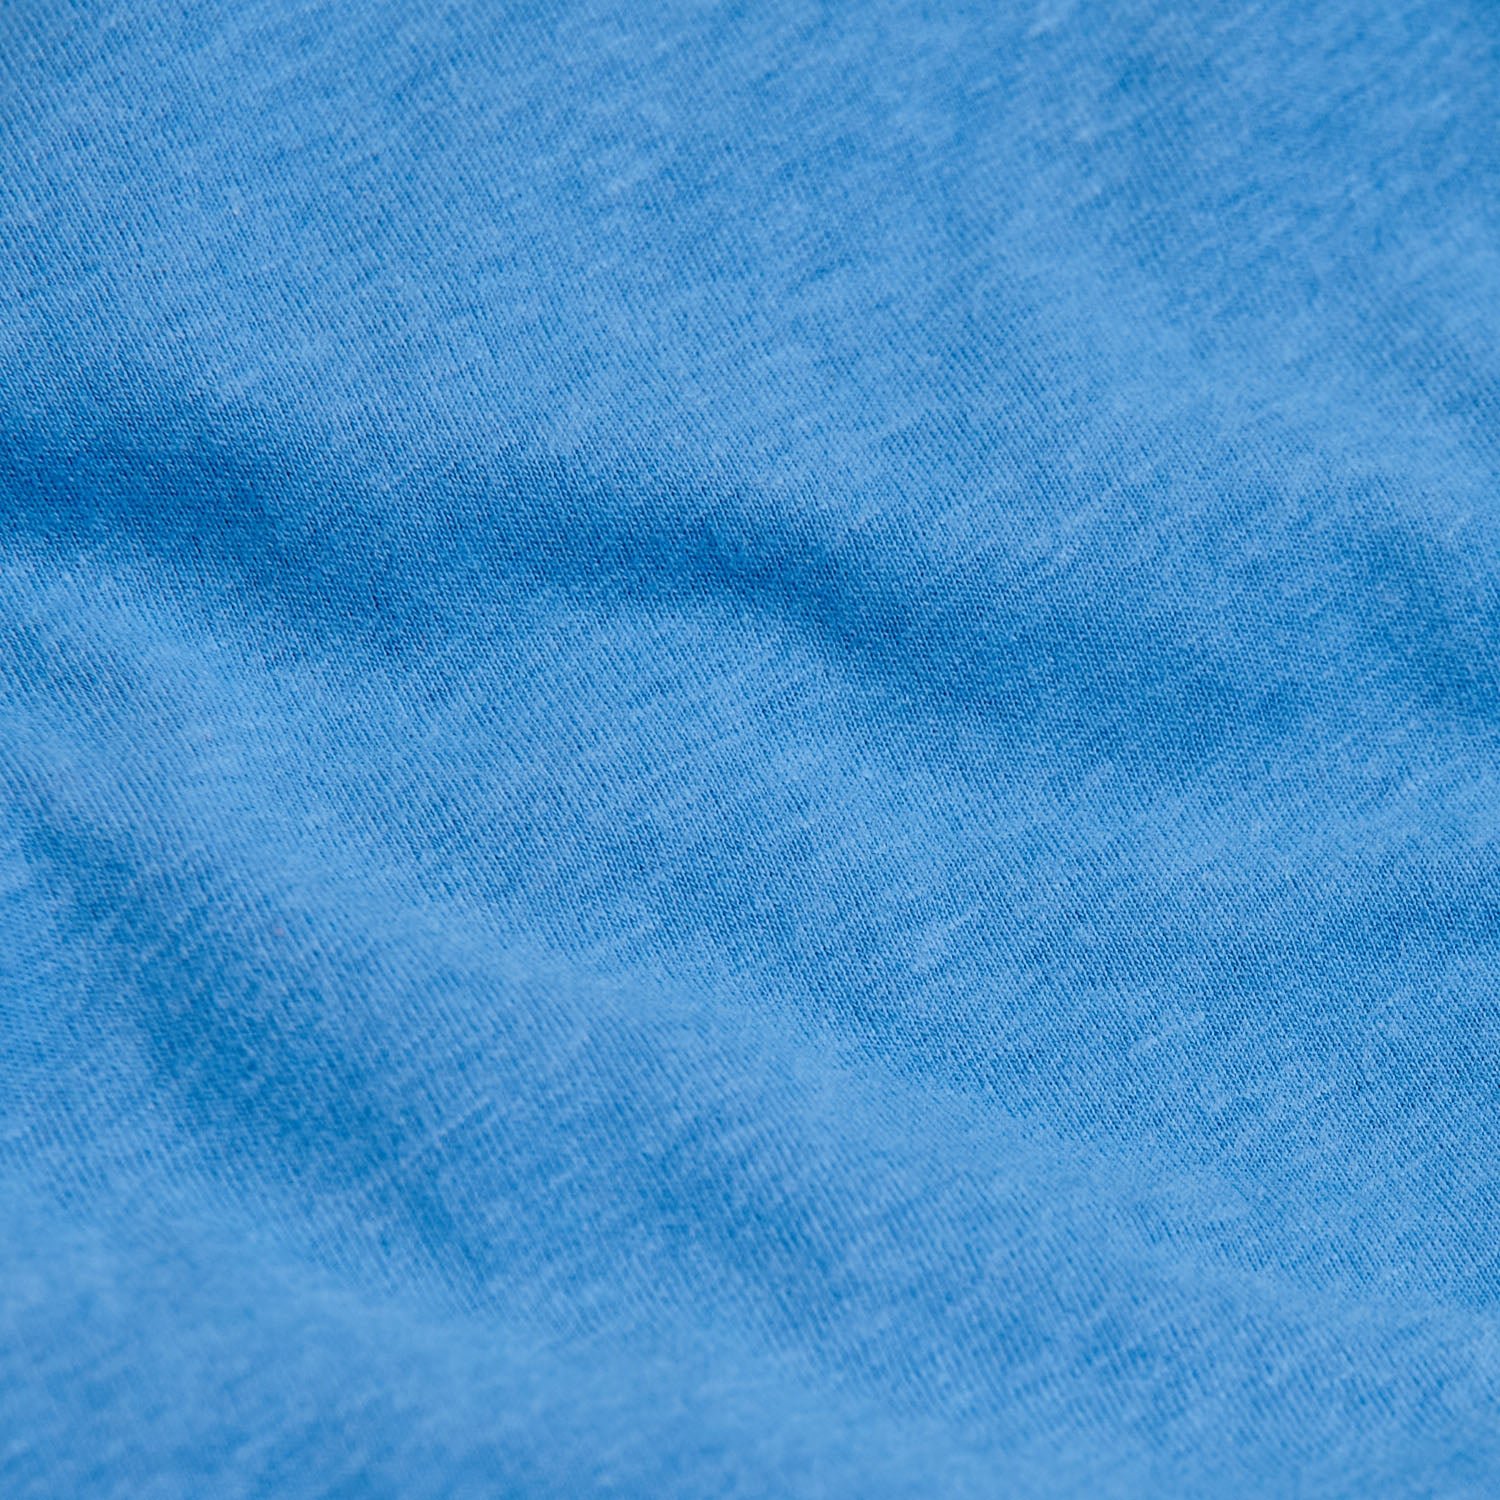 Periwinkle Blue Crew Neck T-Shirt